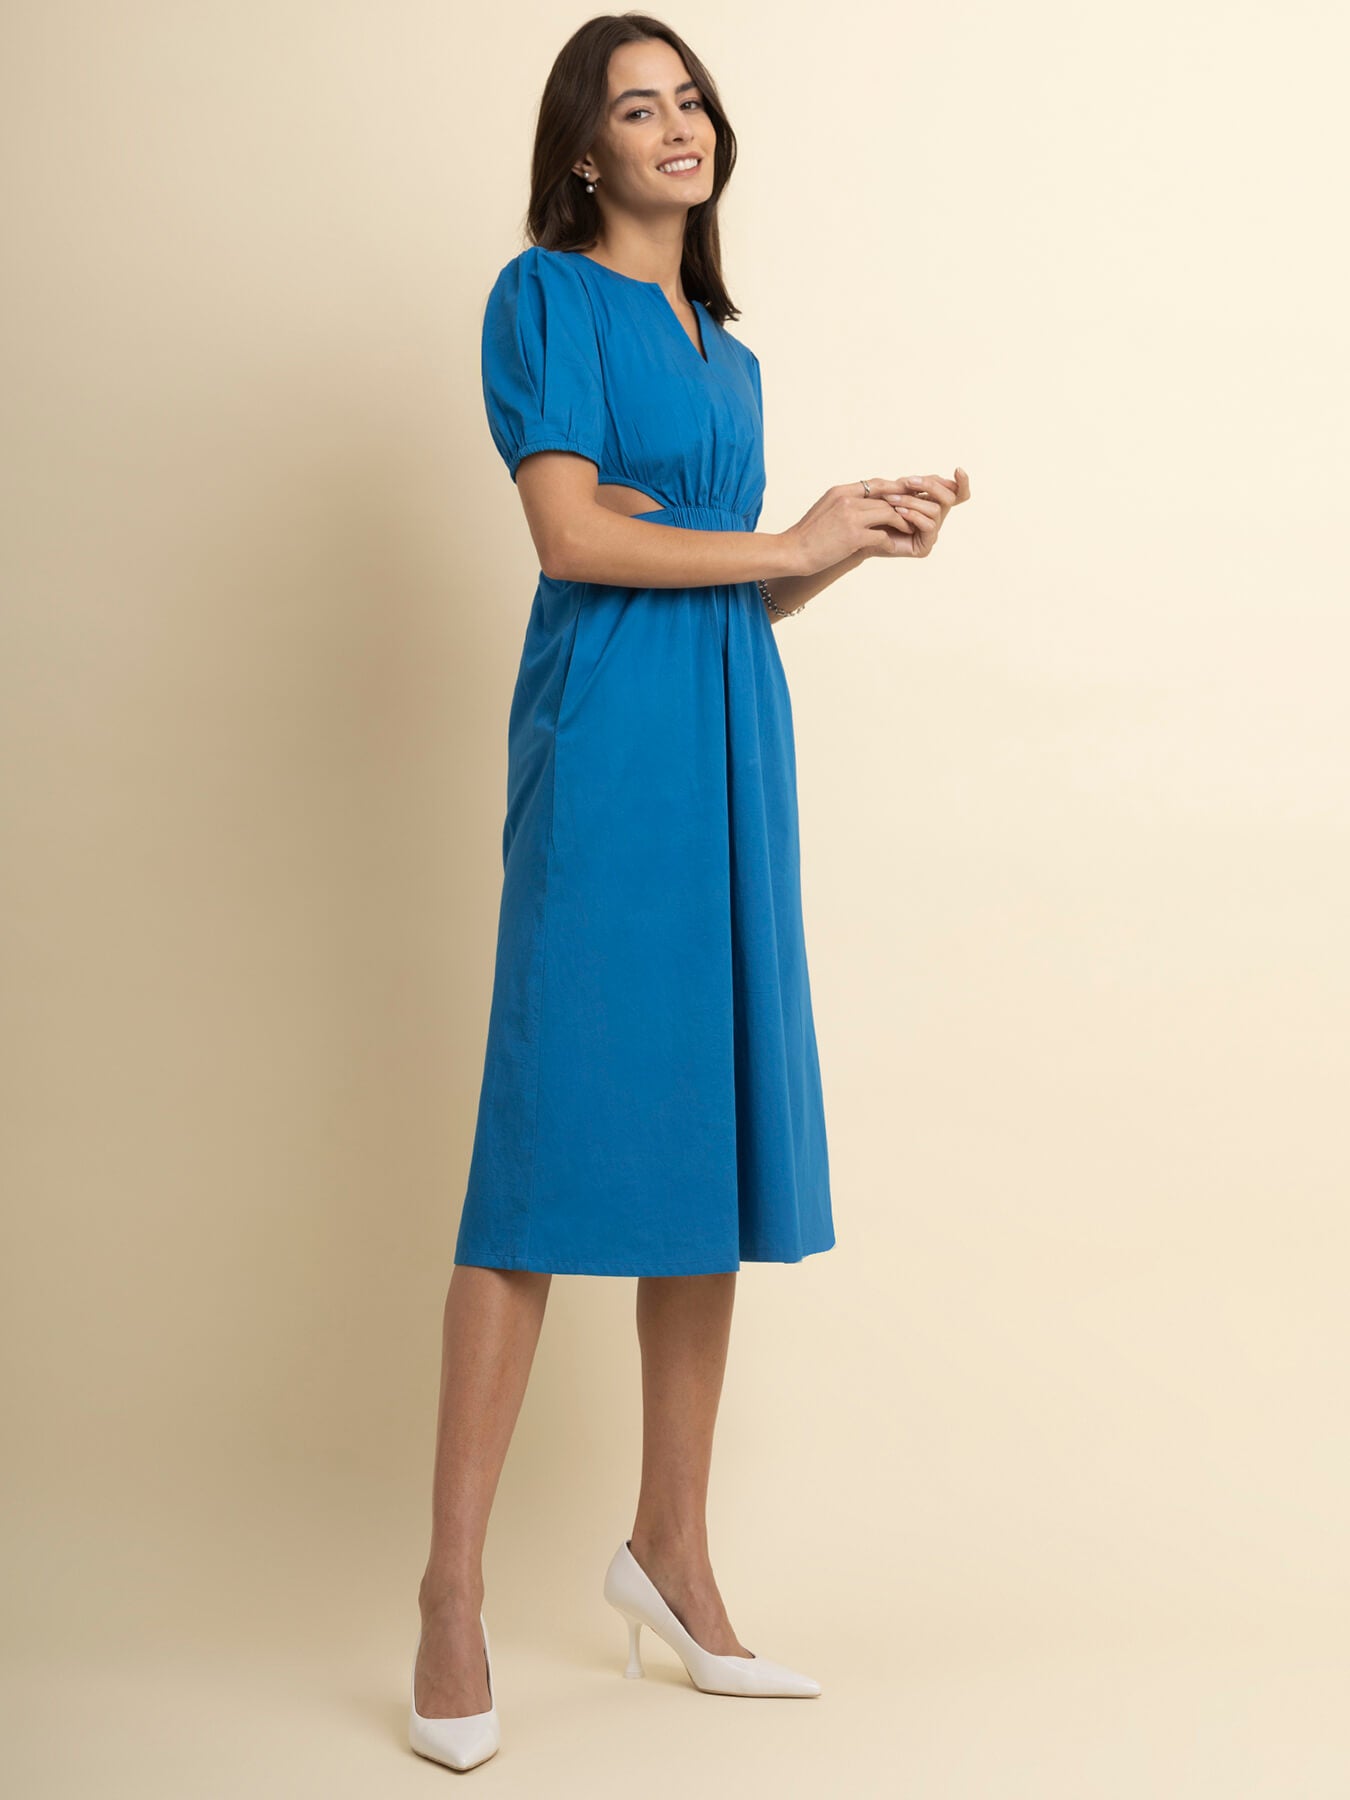 Cutout Detail Dress - Blue